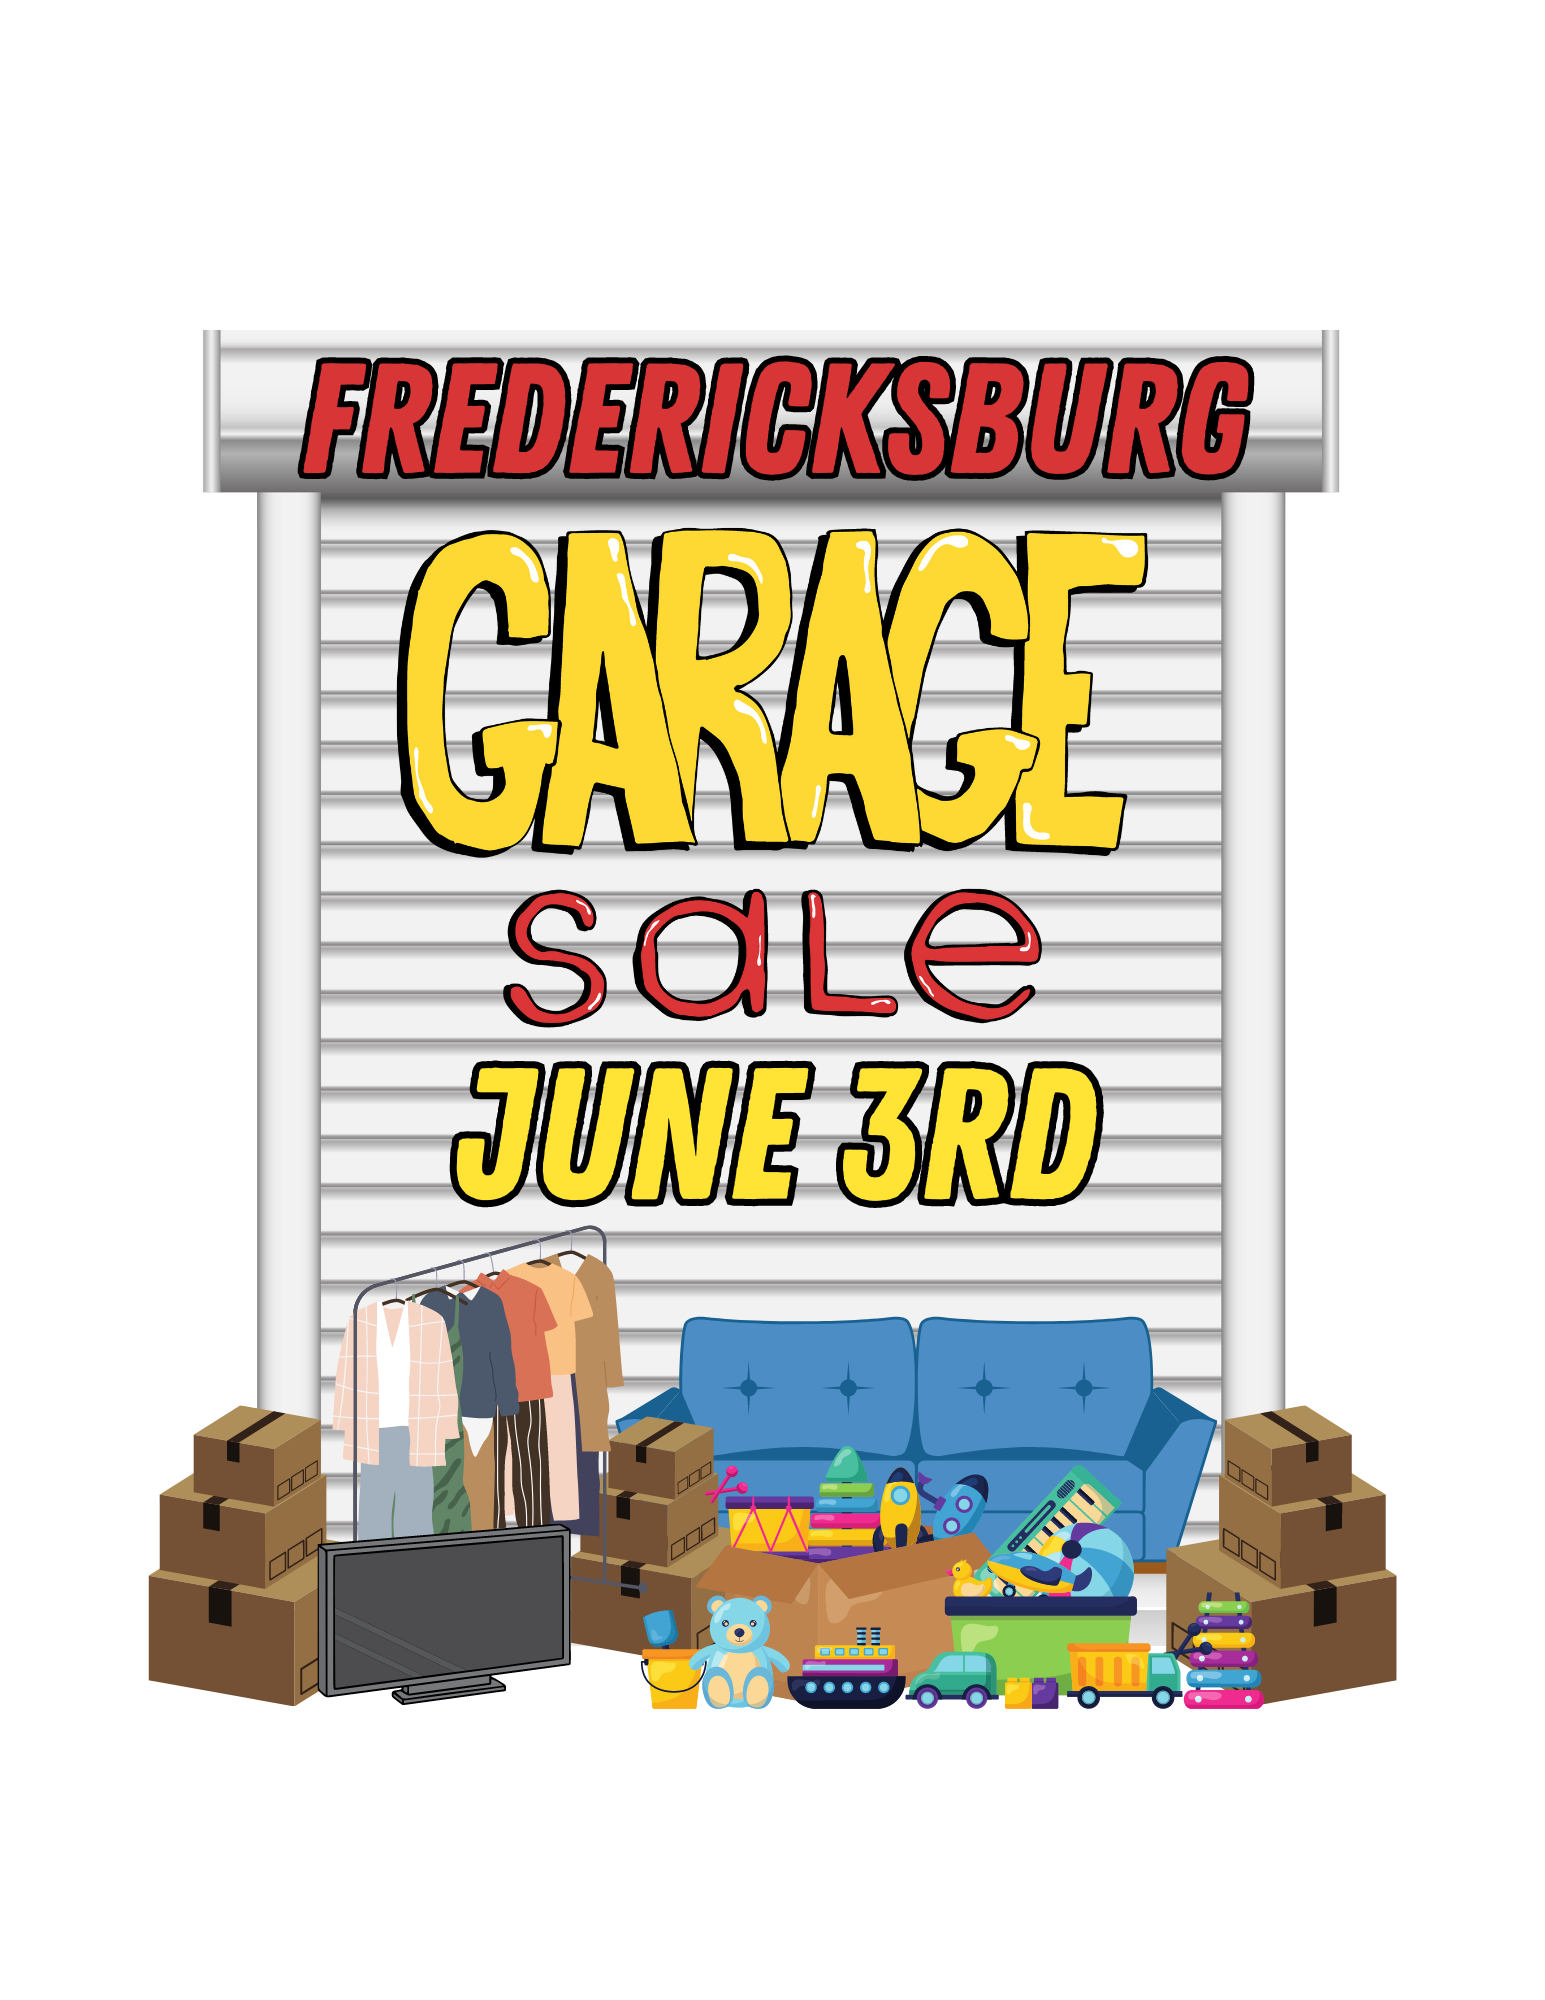 <h1 class="tribe-events-single-event-title">Fredericksburg Garage Sale</h1>